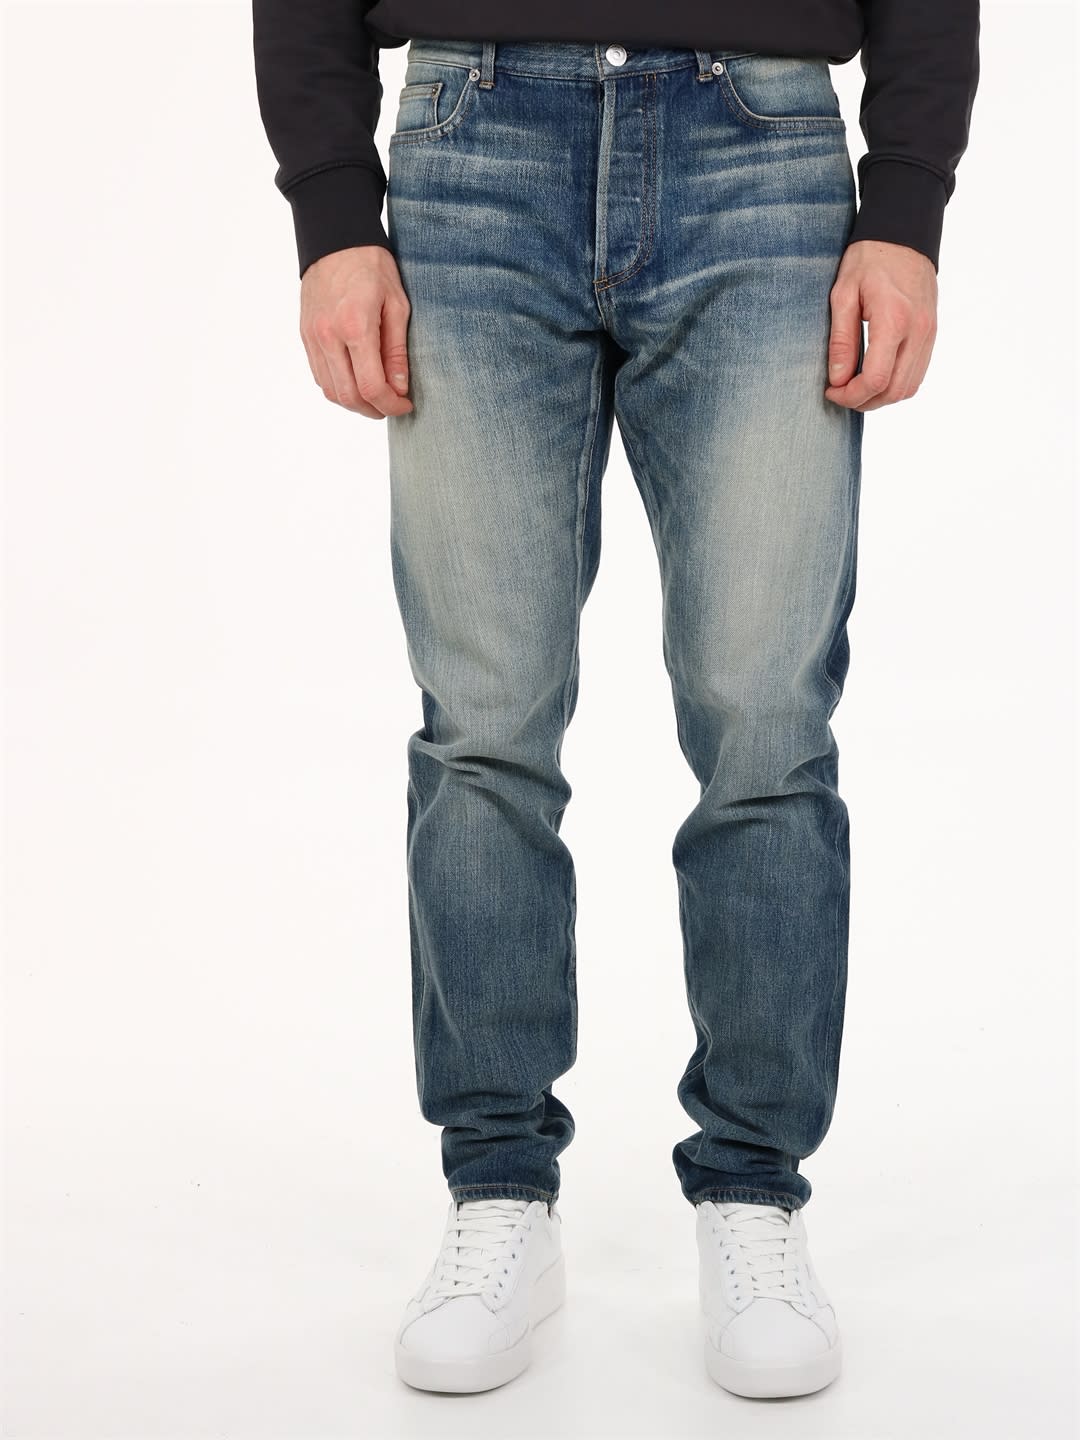 Dior Homme Slim Denim Jeans